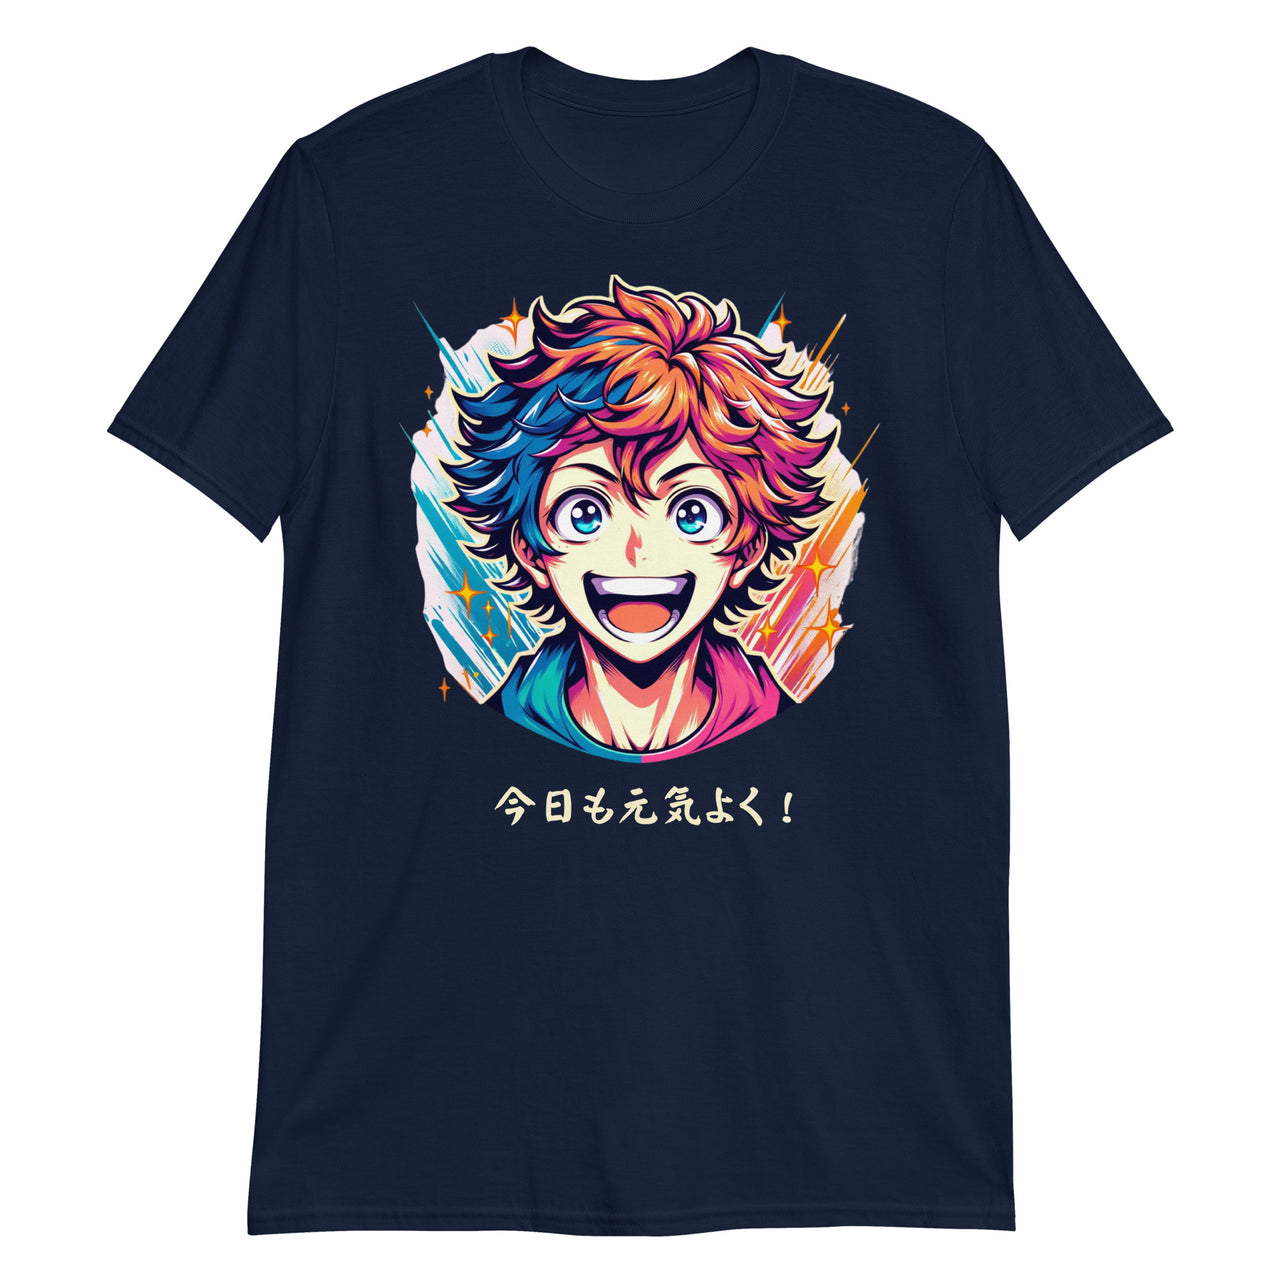 Enthusiastic Young Anime Man T-Shirt